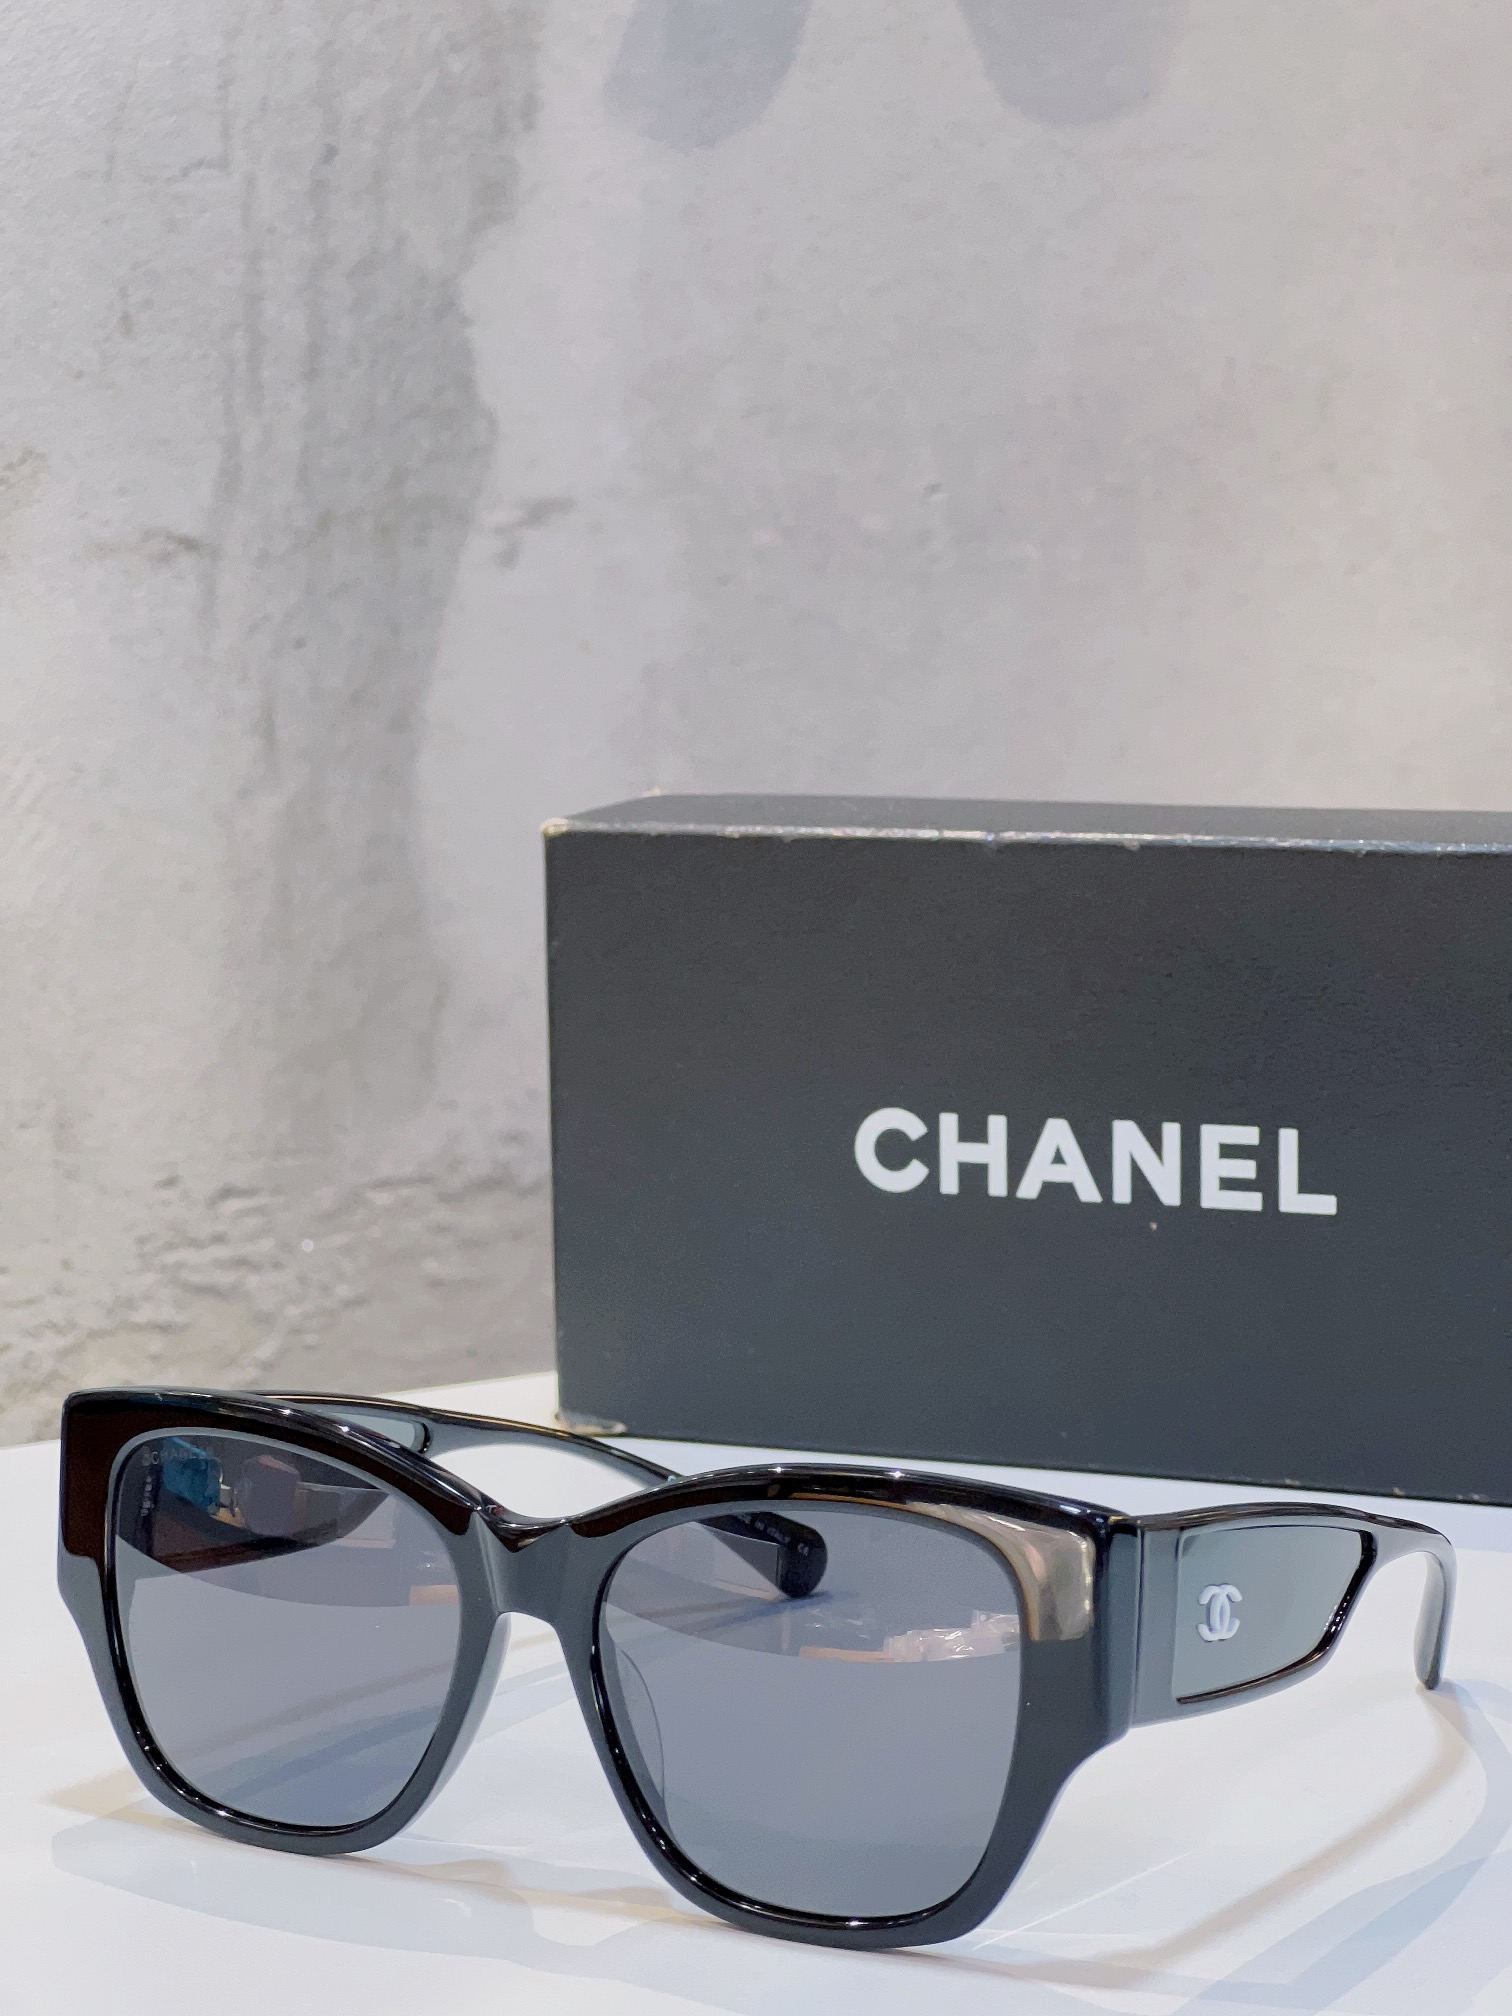 Chanel Sunglasses Black White